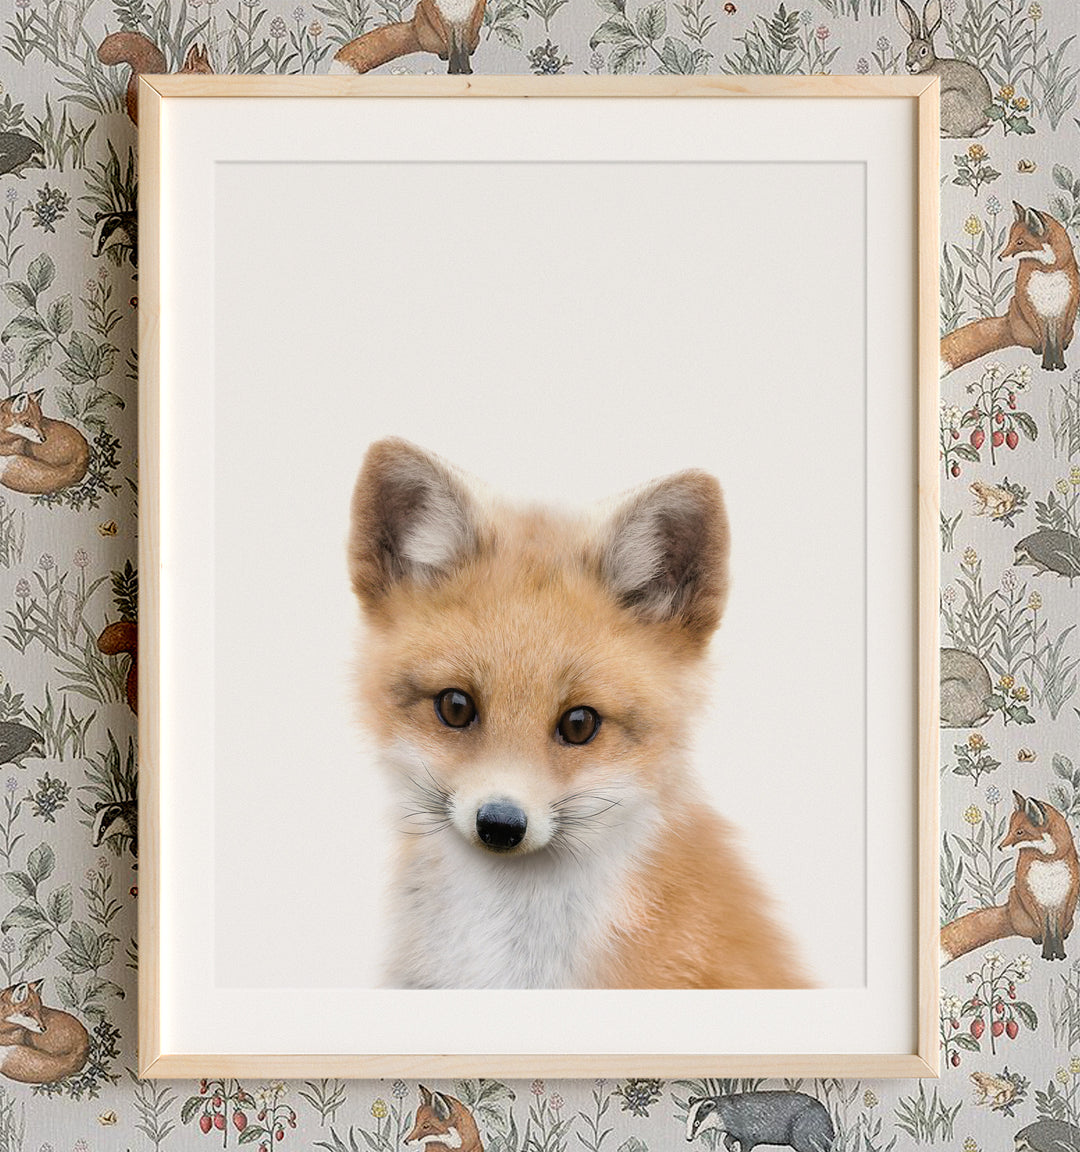 Portrait of a baby fox - original nursery animal artwork from The Crown Prints